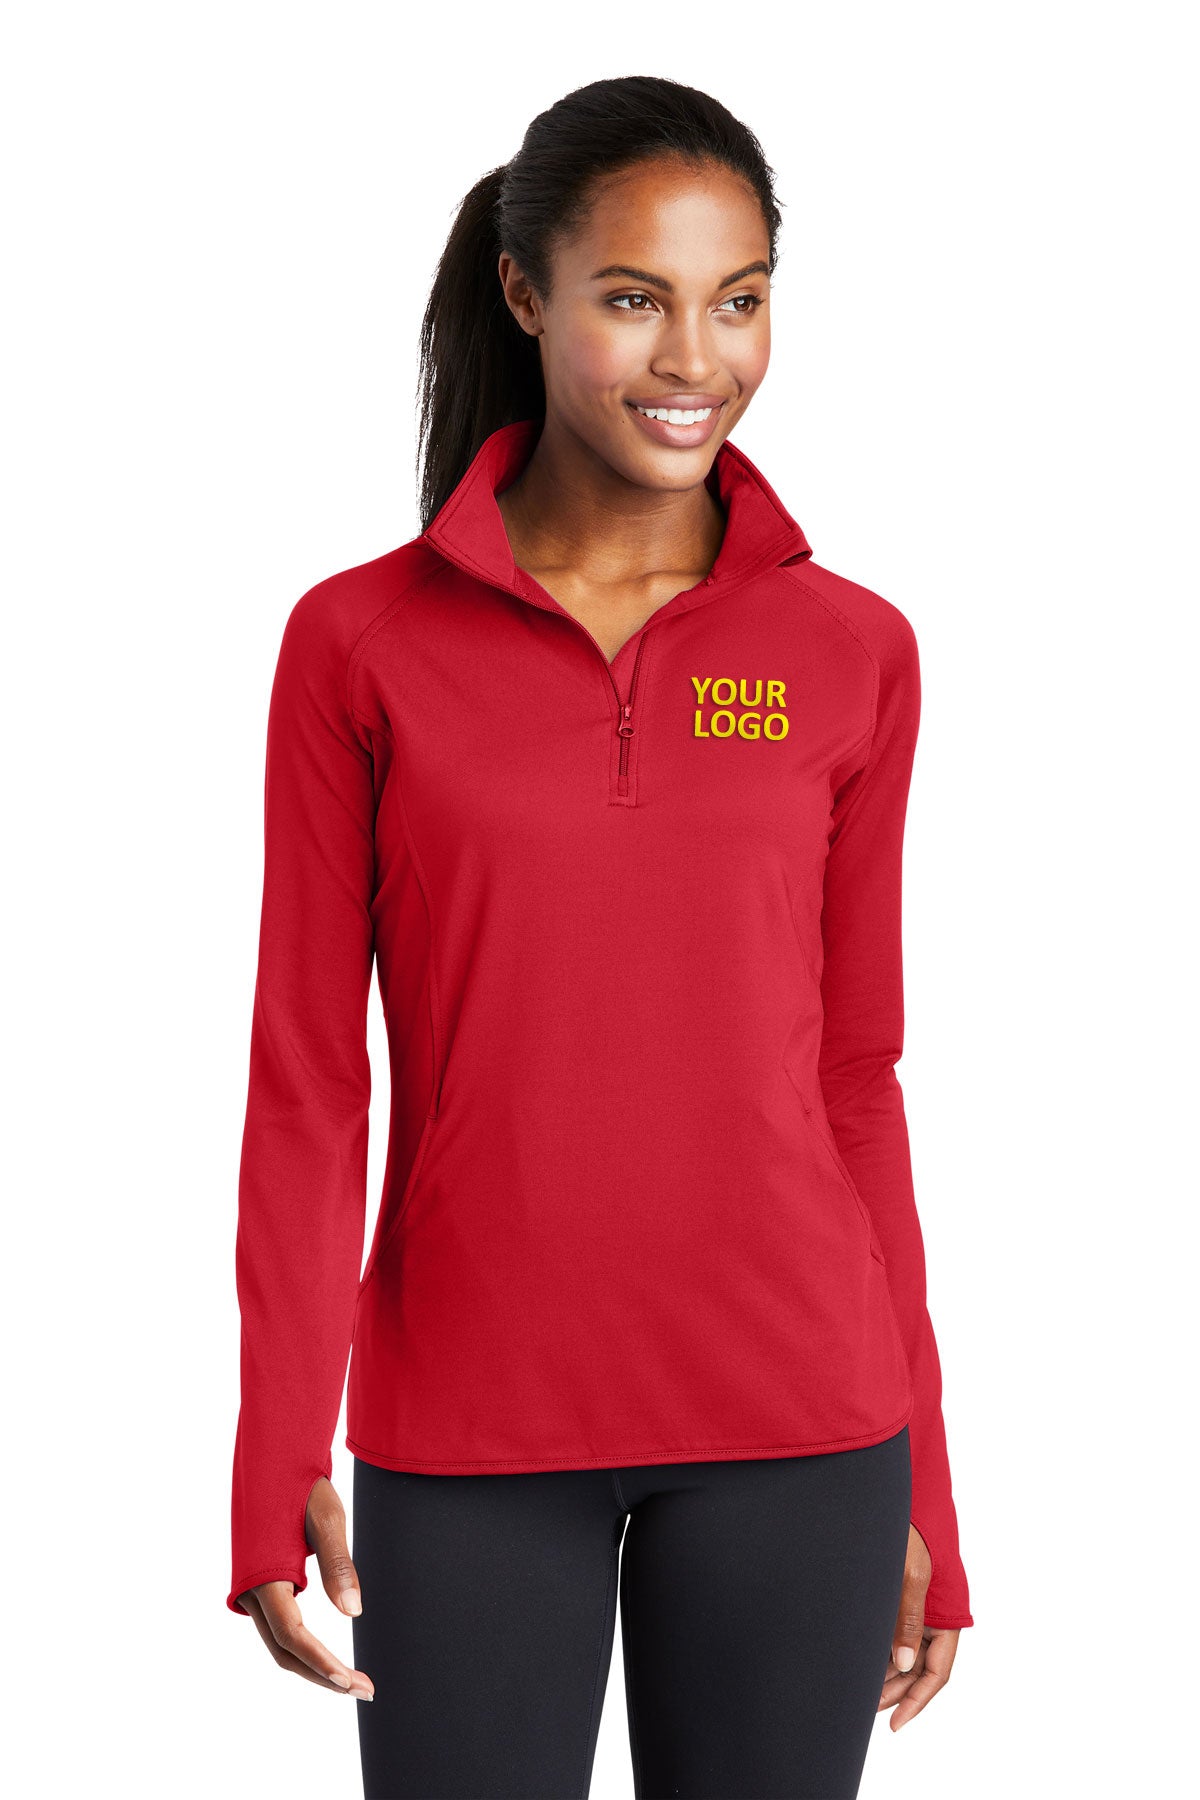 Sport-Tek True Red LST850 company sweatshirts embroidered